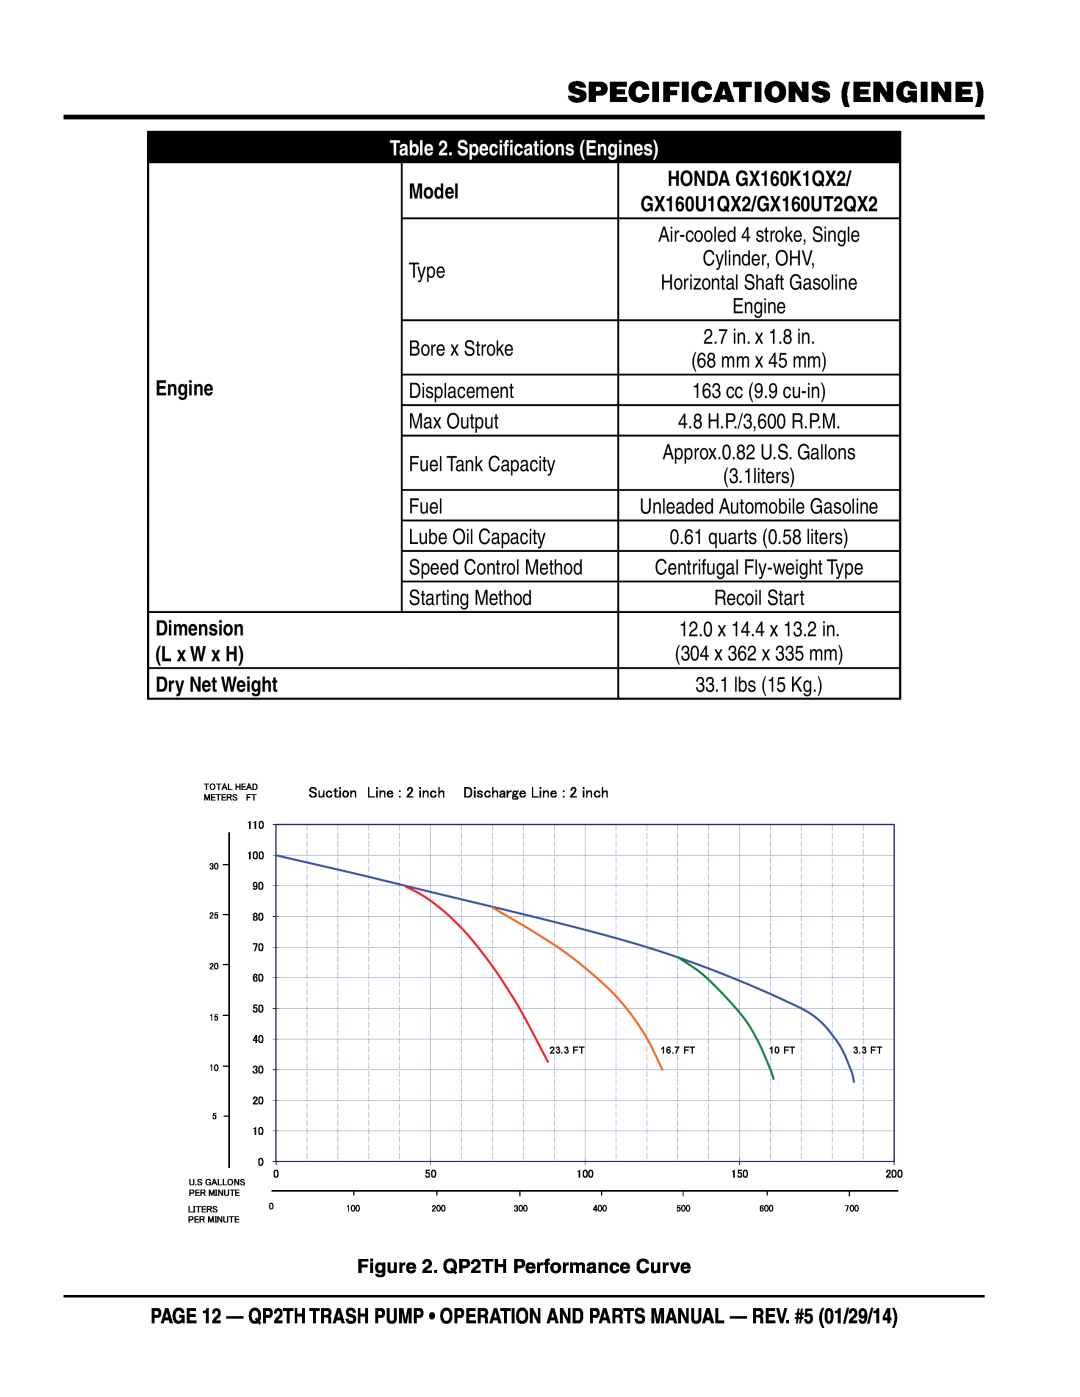 Multiquip QP2TH manual Specifications Engines, HONDA GX160K1QX2, Dimension, L x W x H, Model, Dry Net Weight 